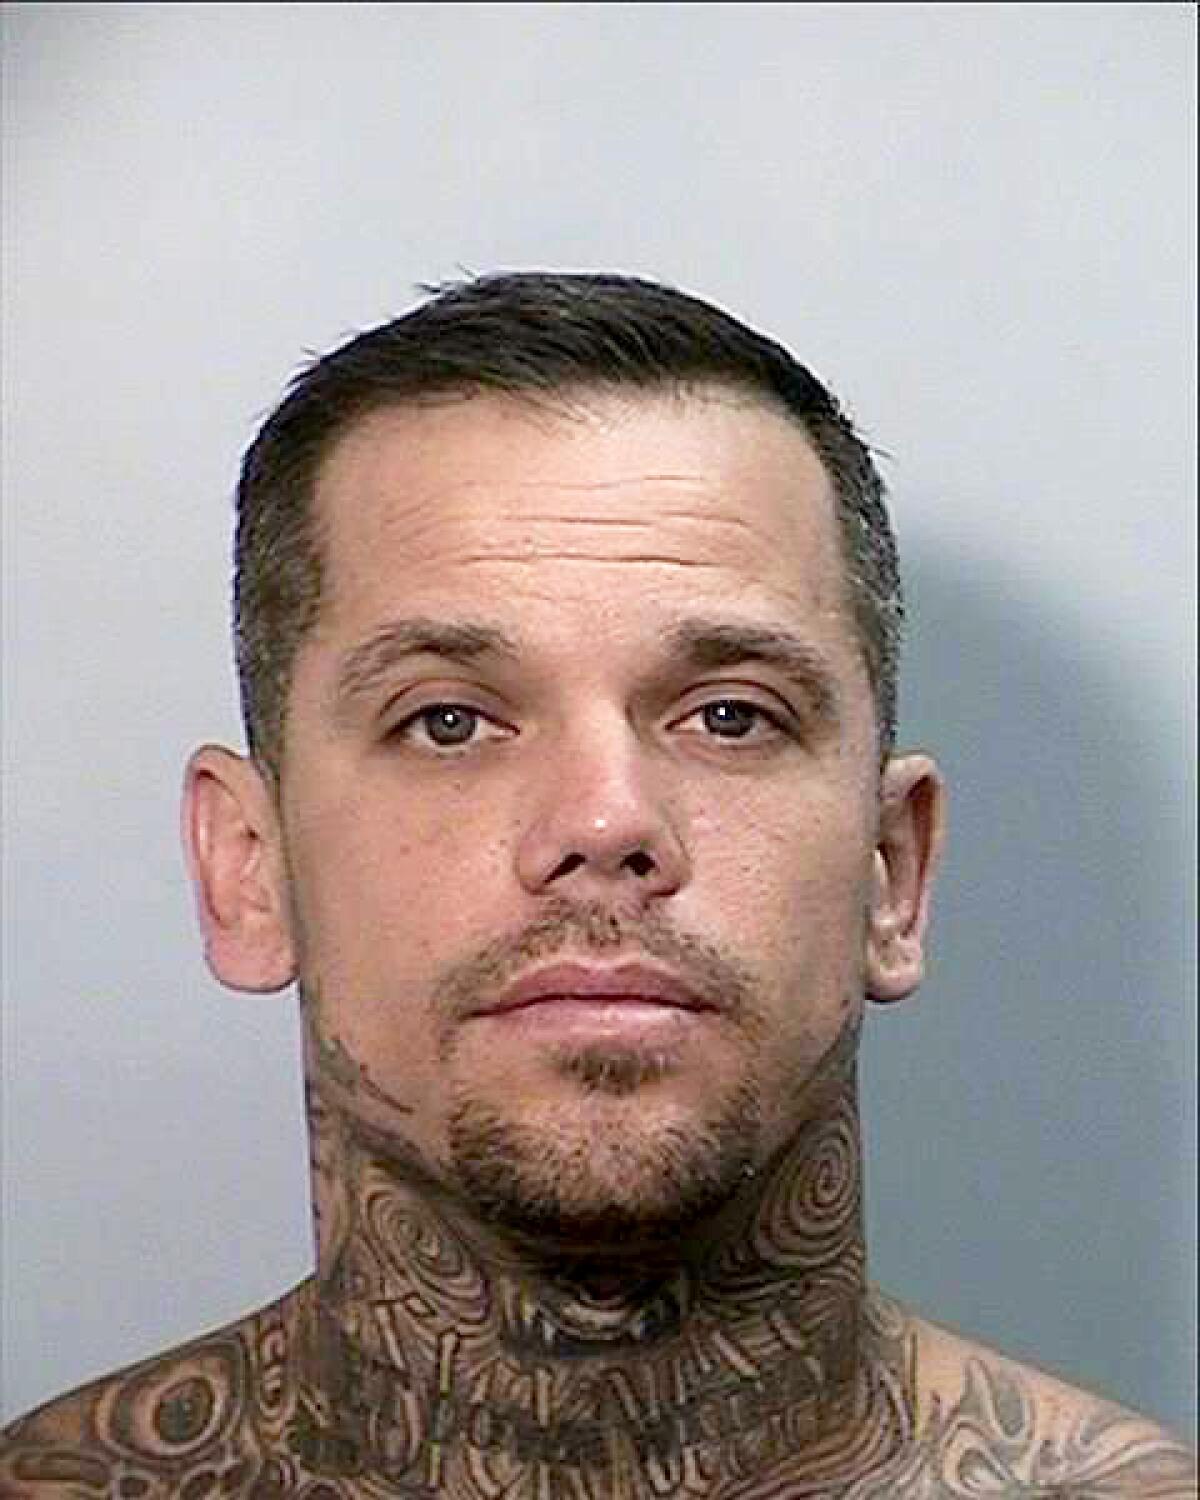 A mug shot of a man with facial hair and neck tattoos. 